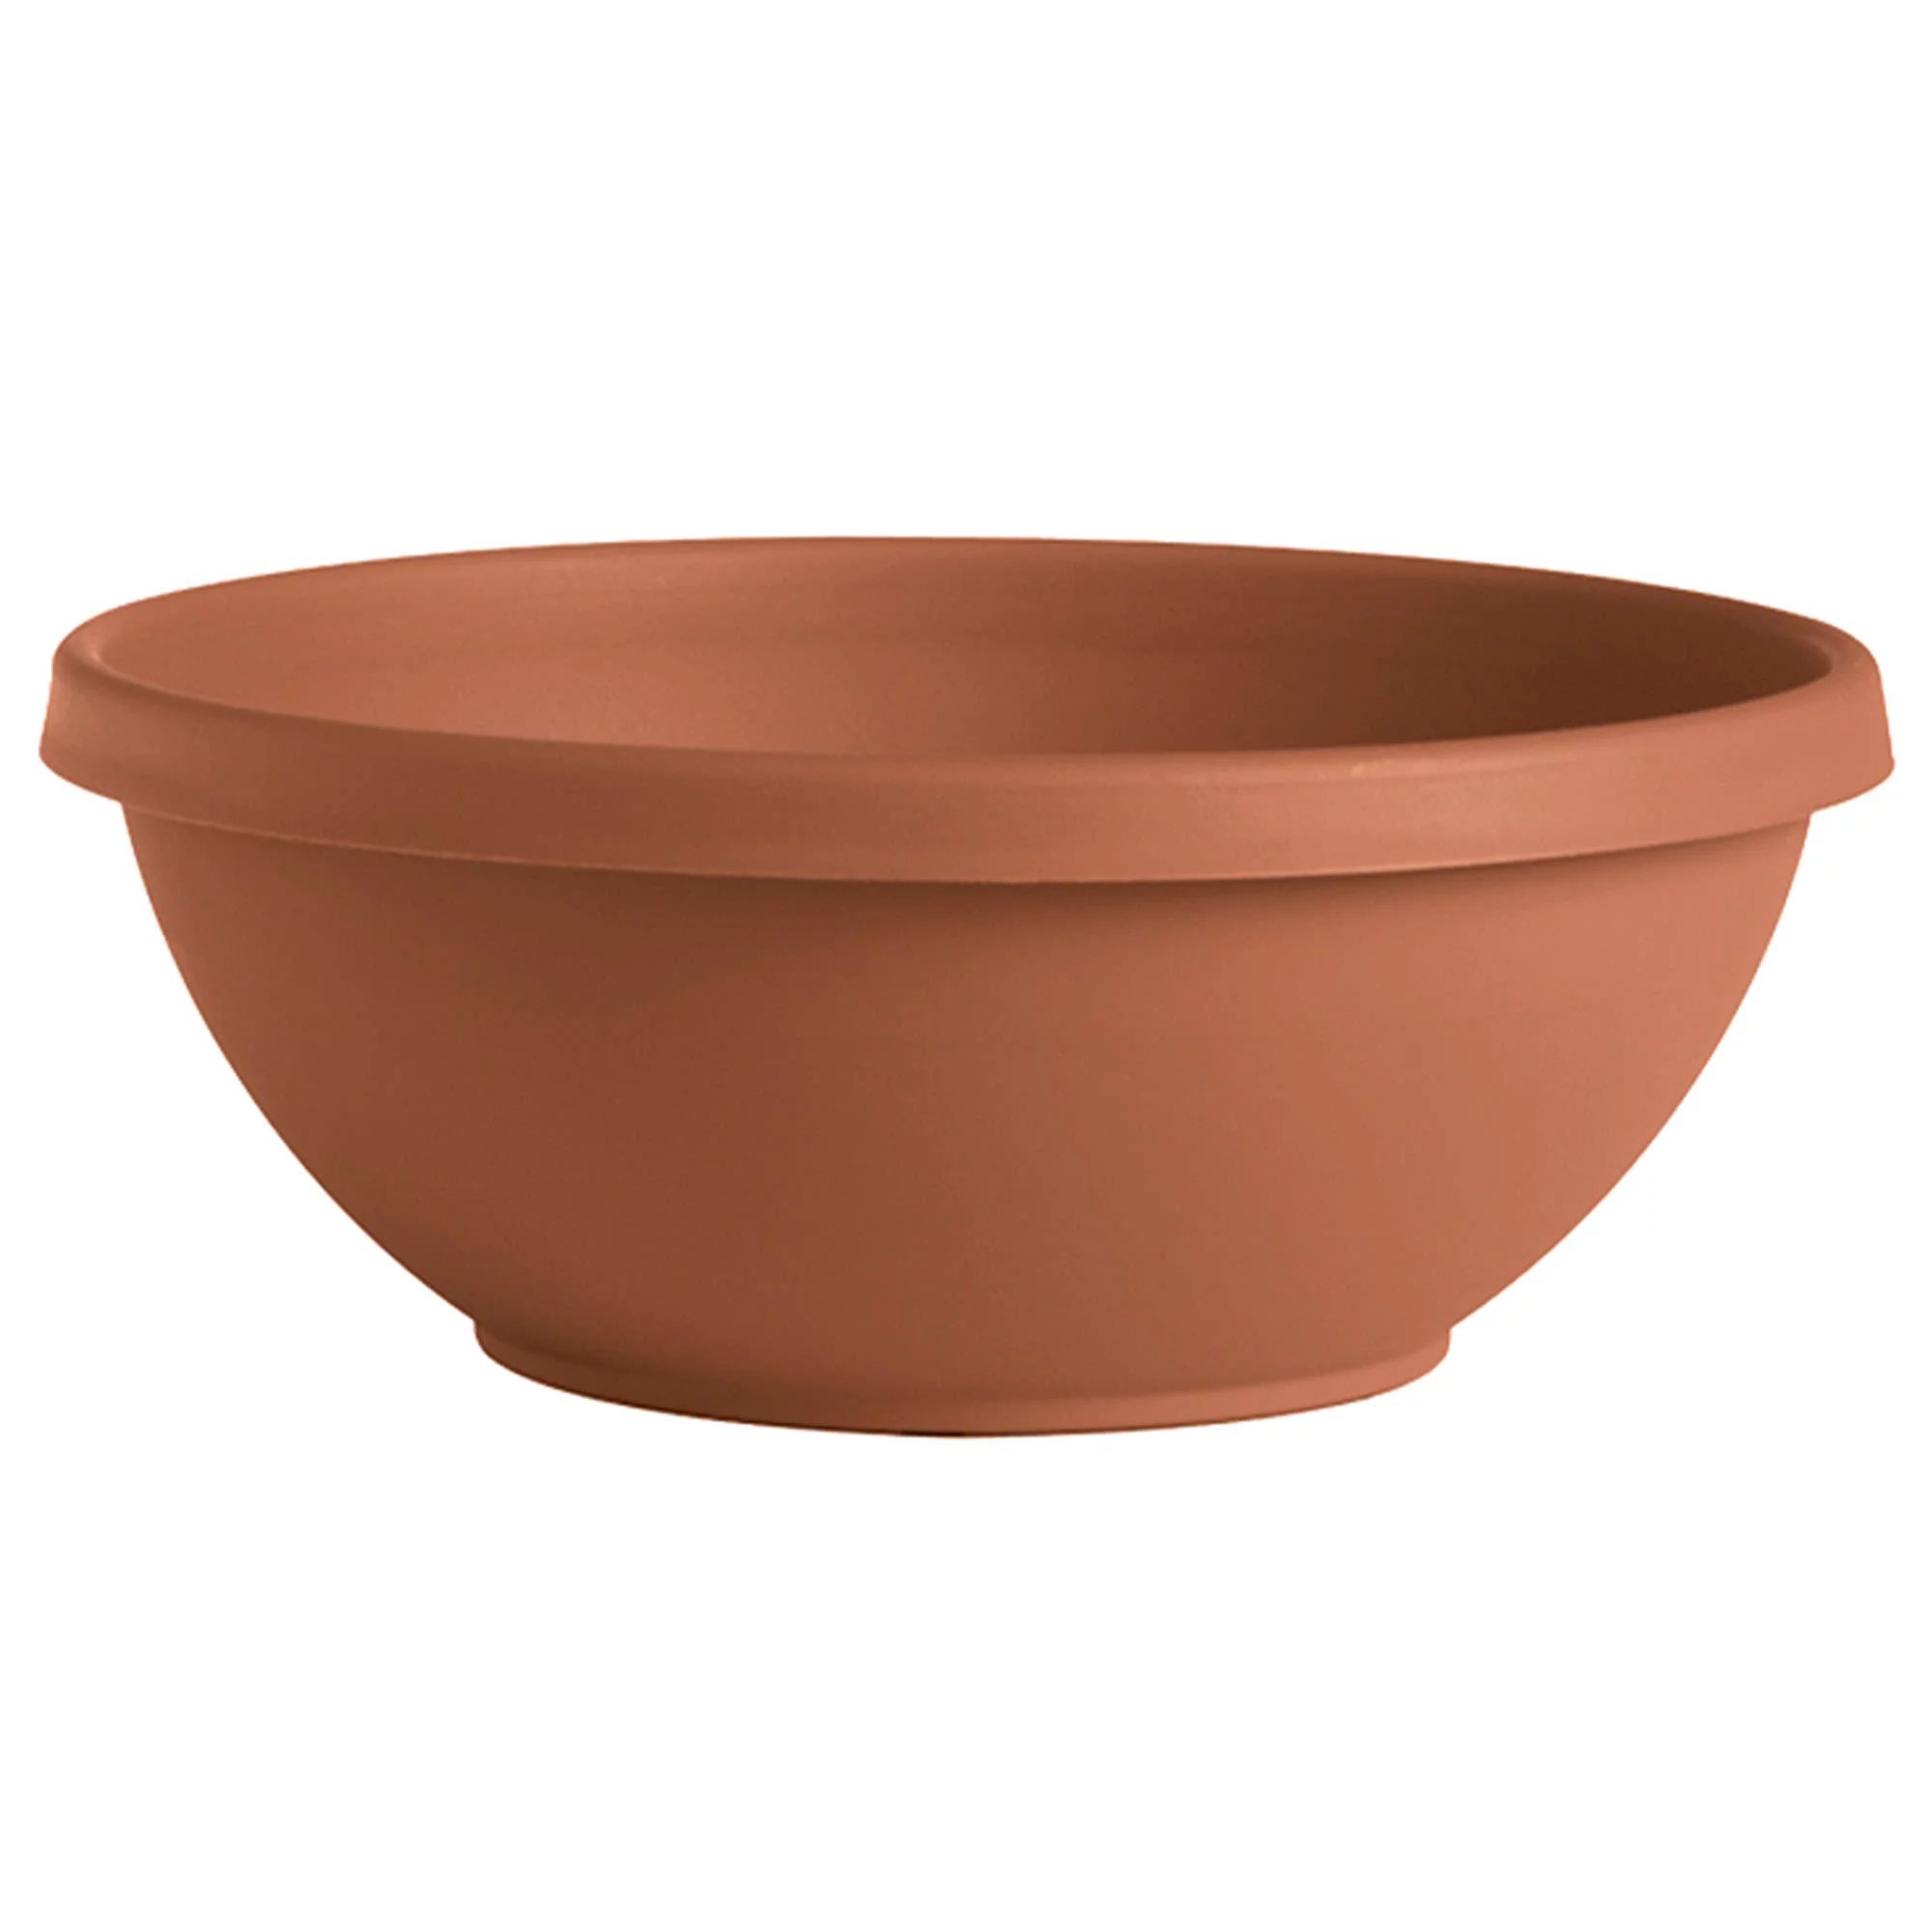 Bloem 14-in Terra Round Resin Planter Bowl - Terra Cotta Color | Walmart (US)